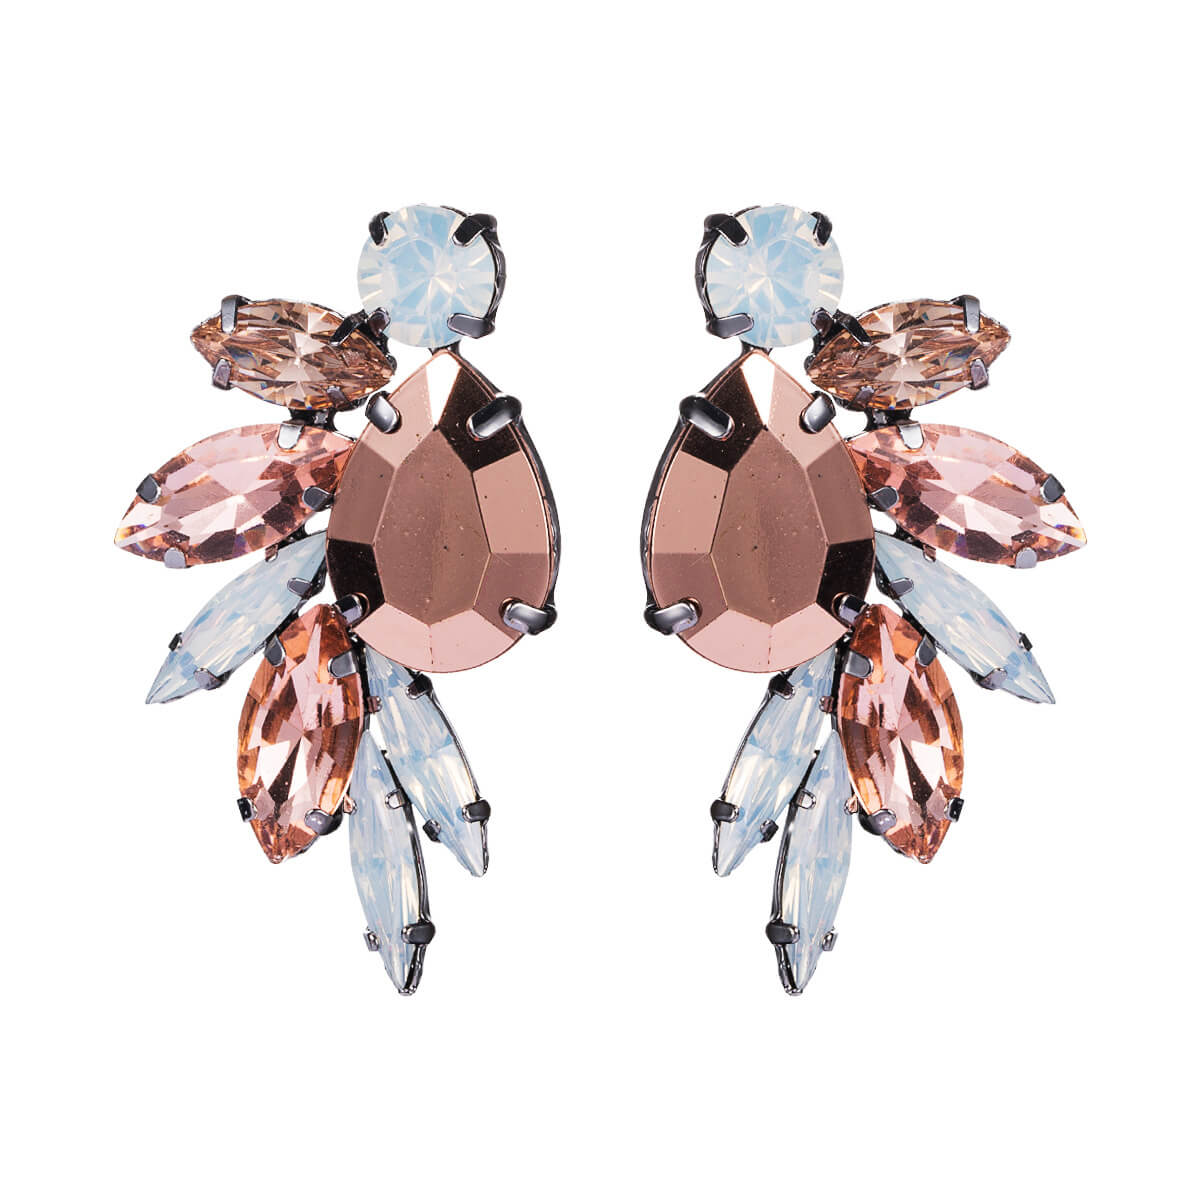 Rhinestone and Diamante Cluster Stud Earrings in Peach and Milk-Aqua